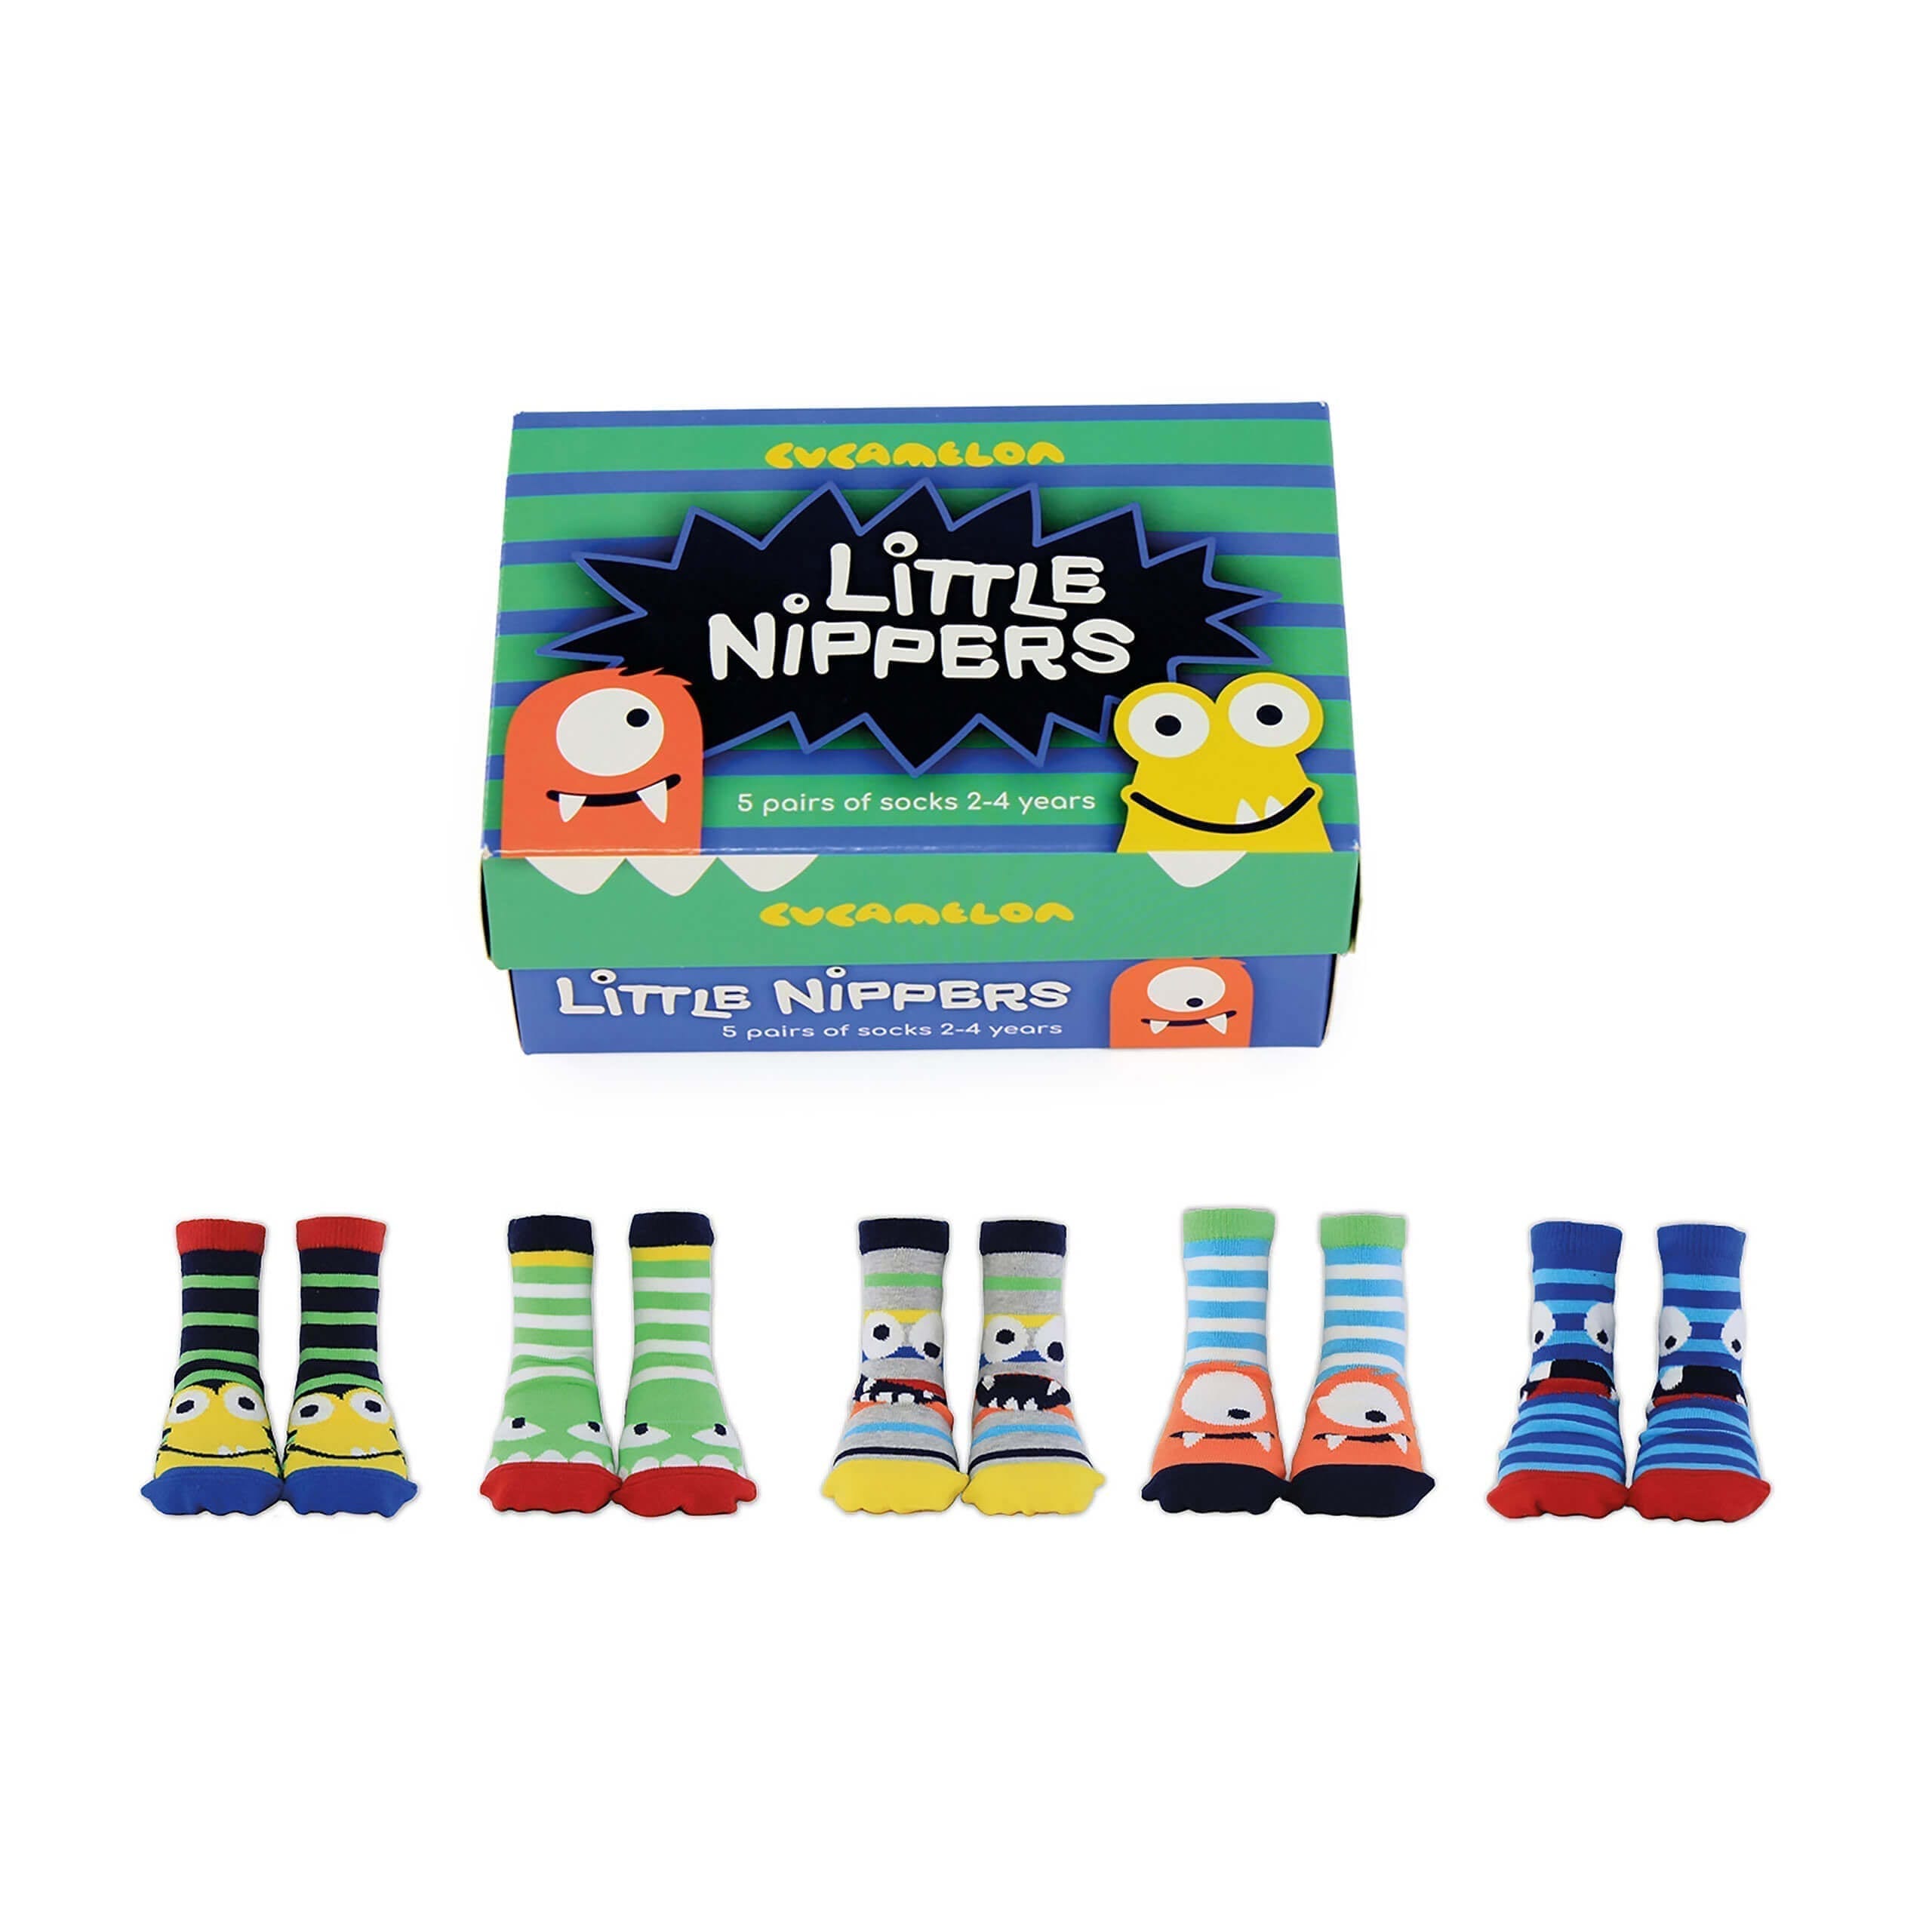 United Oddsocks Cucamelon Little Nippers Children's Socks - 2-4 Years